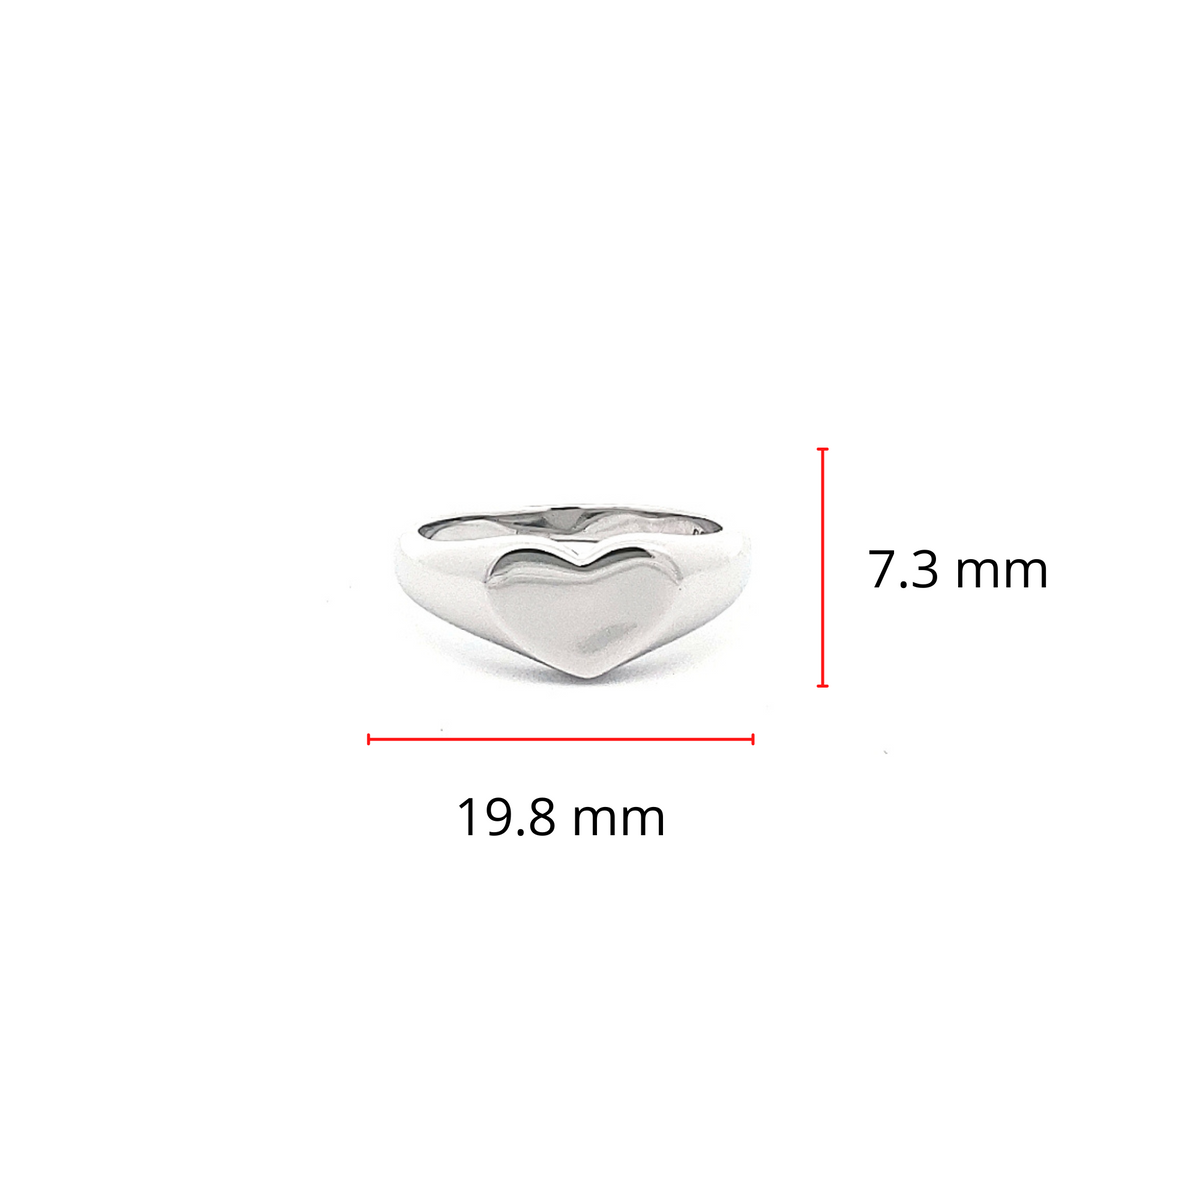 Silver 925 High Polish Heart Shaped Engravable Ring